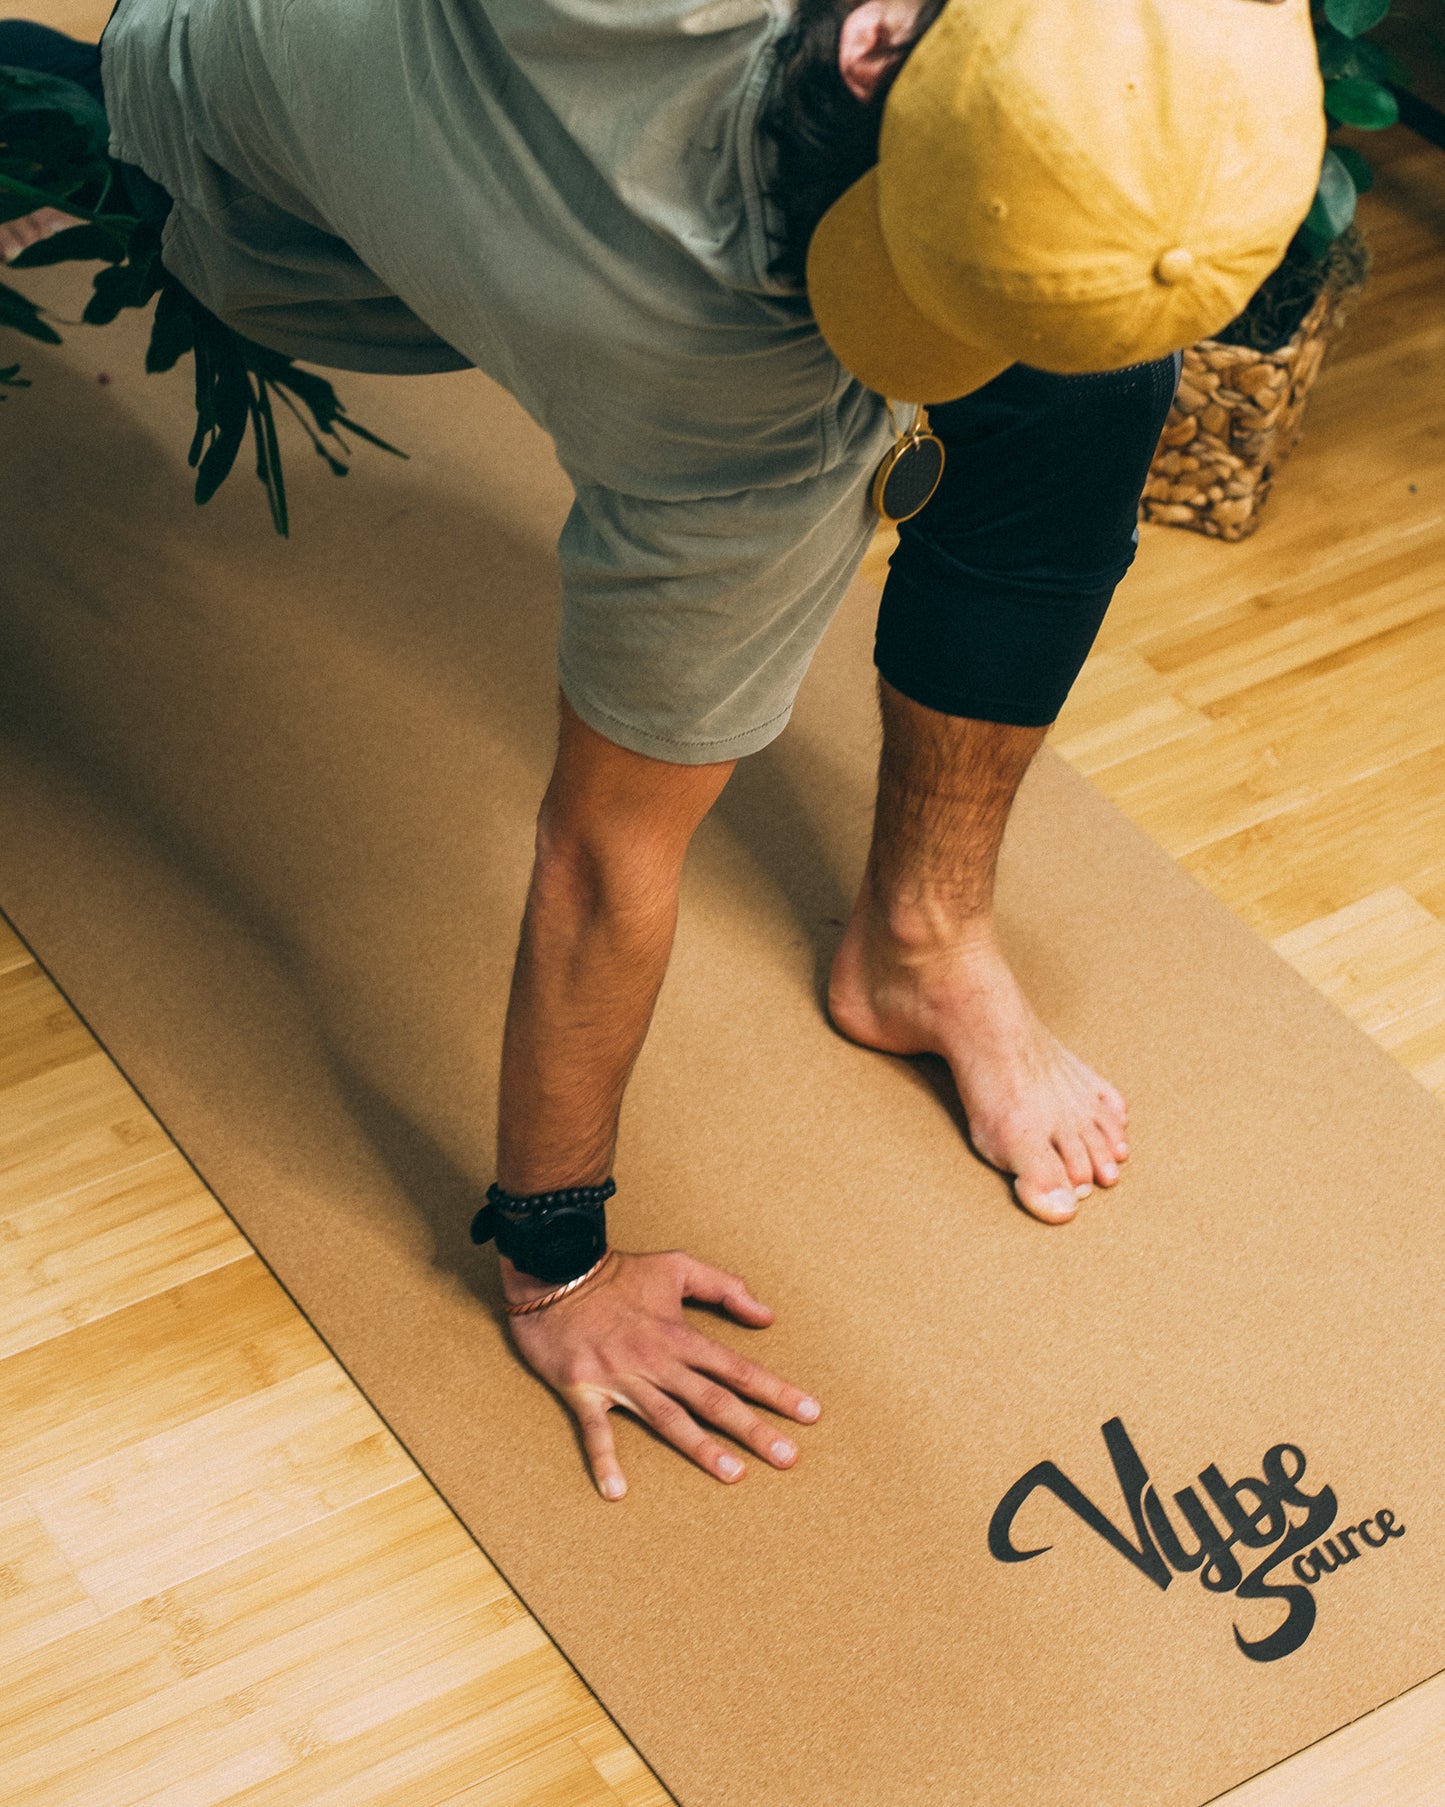 Vybe Source Yoga Mat